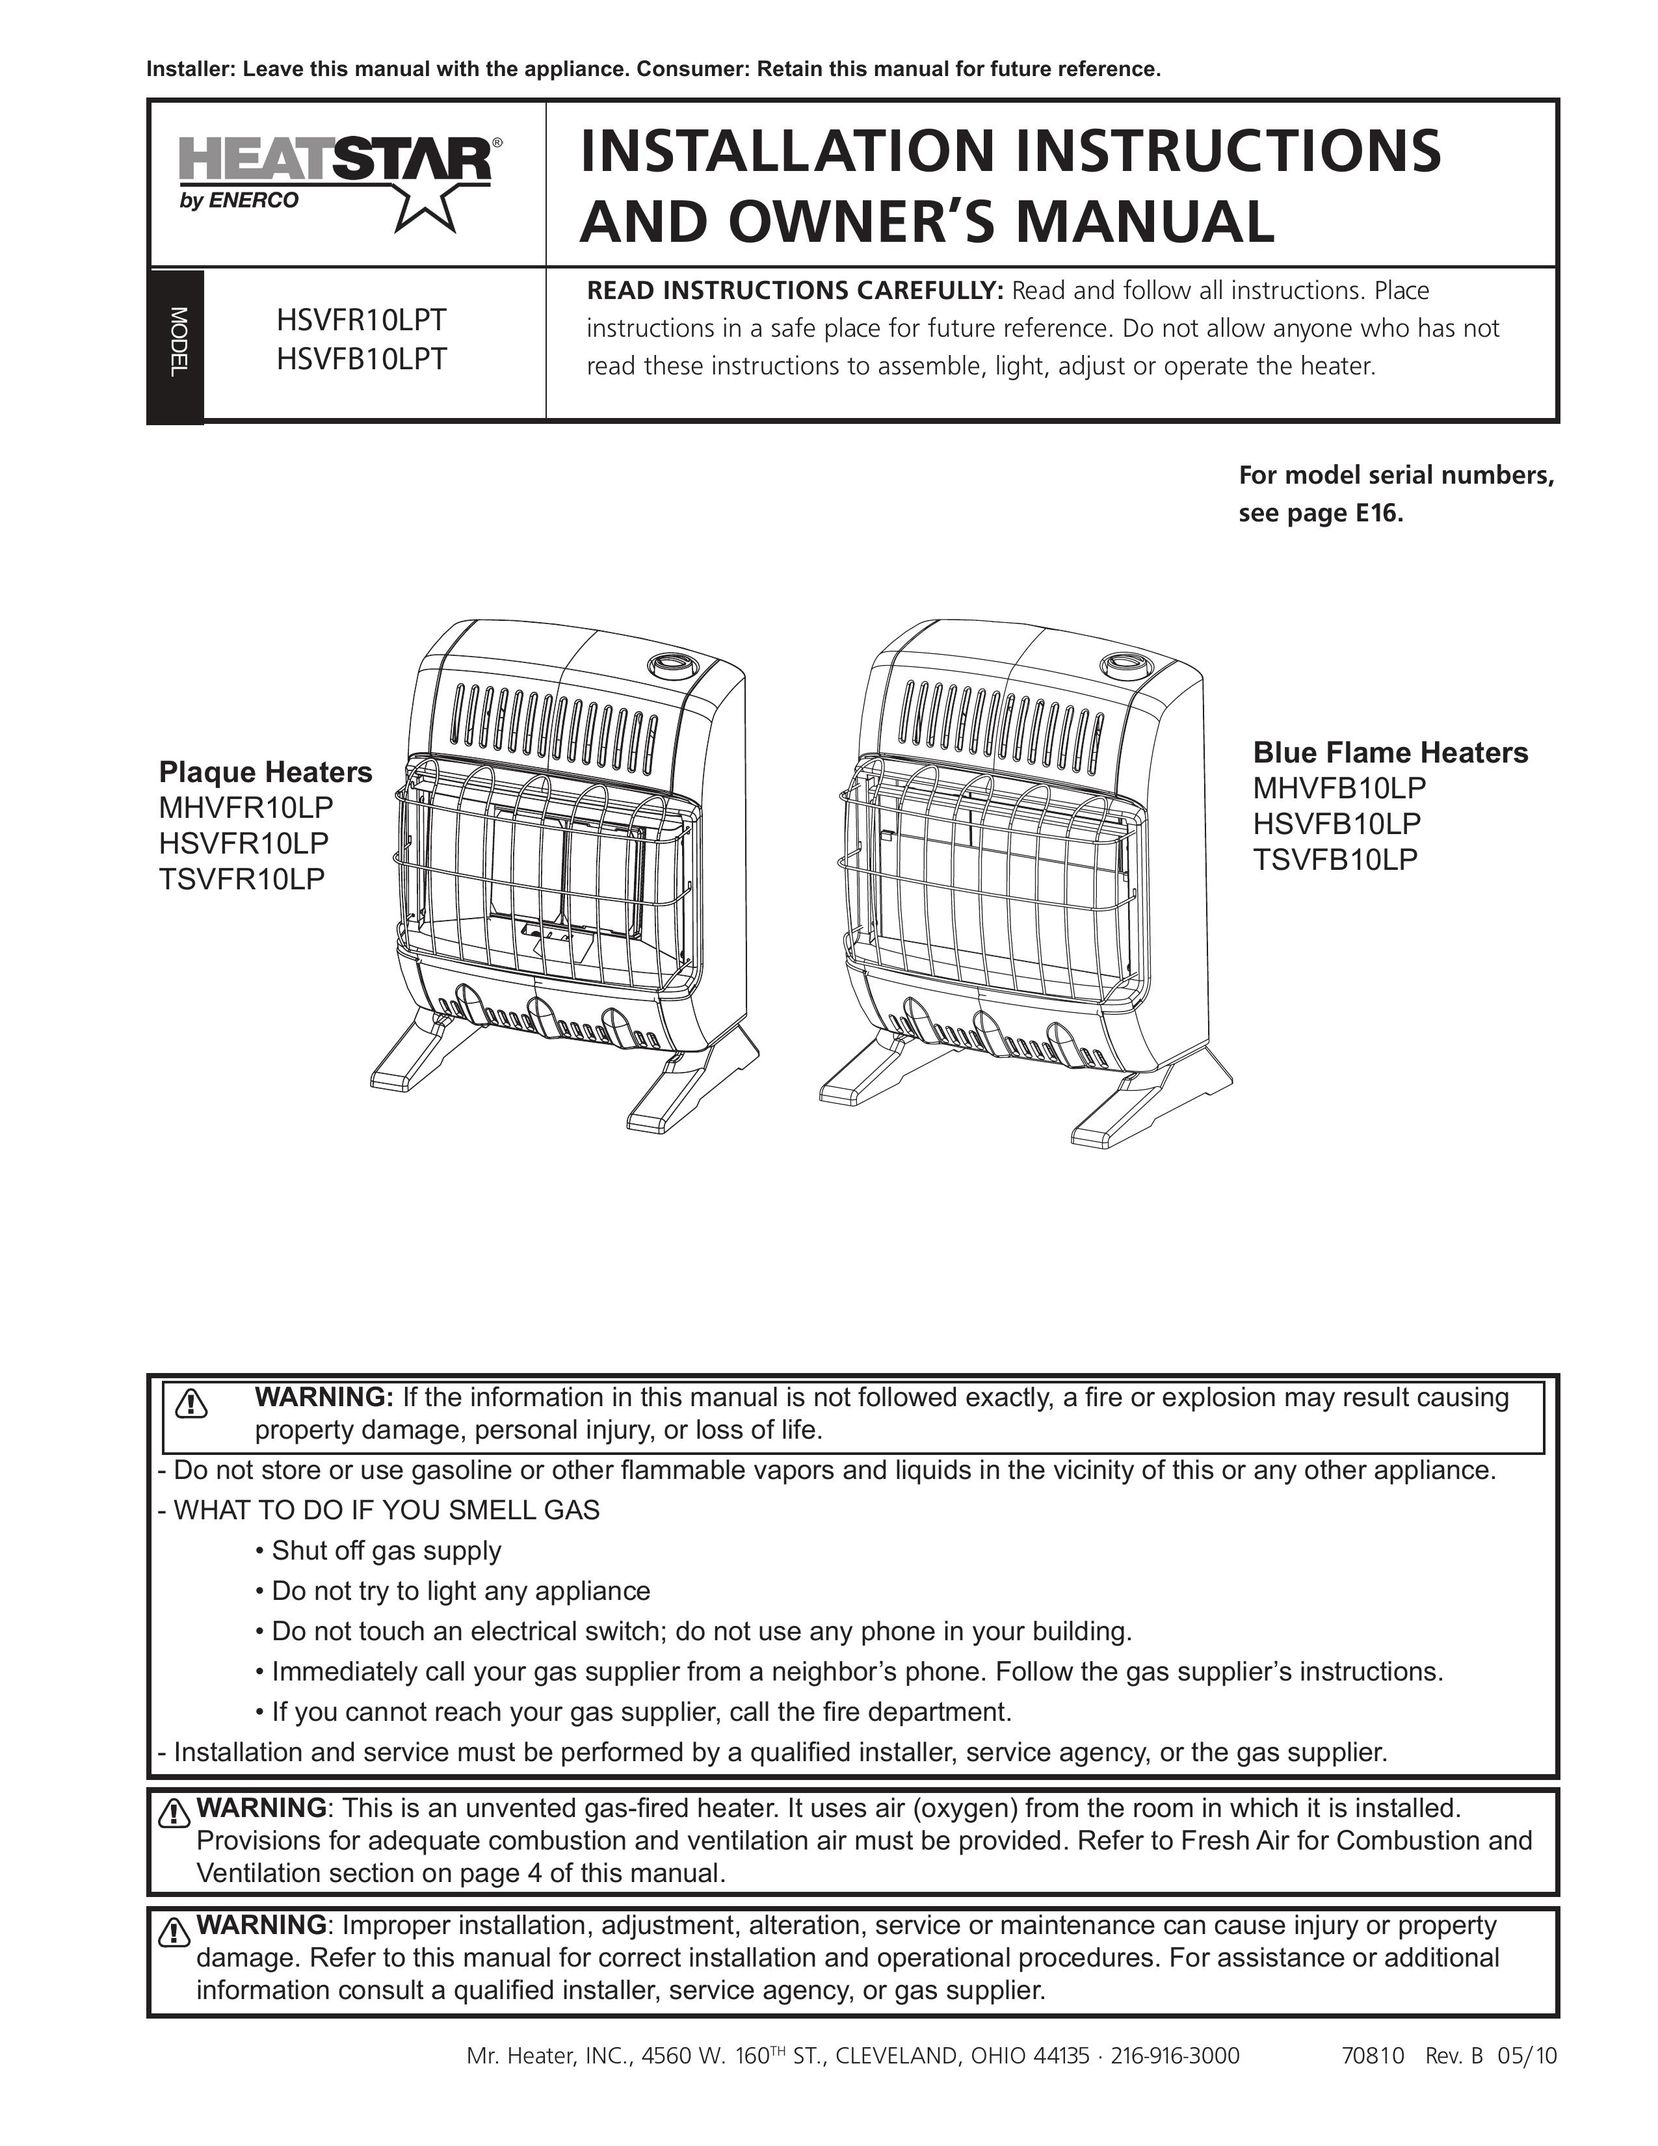 Enerco TSVFB10LP Gas Heater User Manual